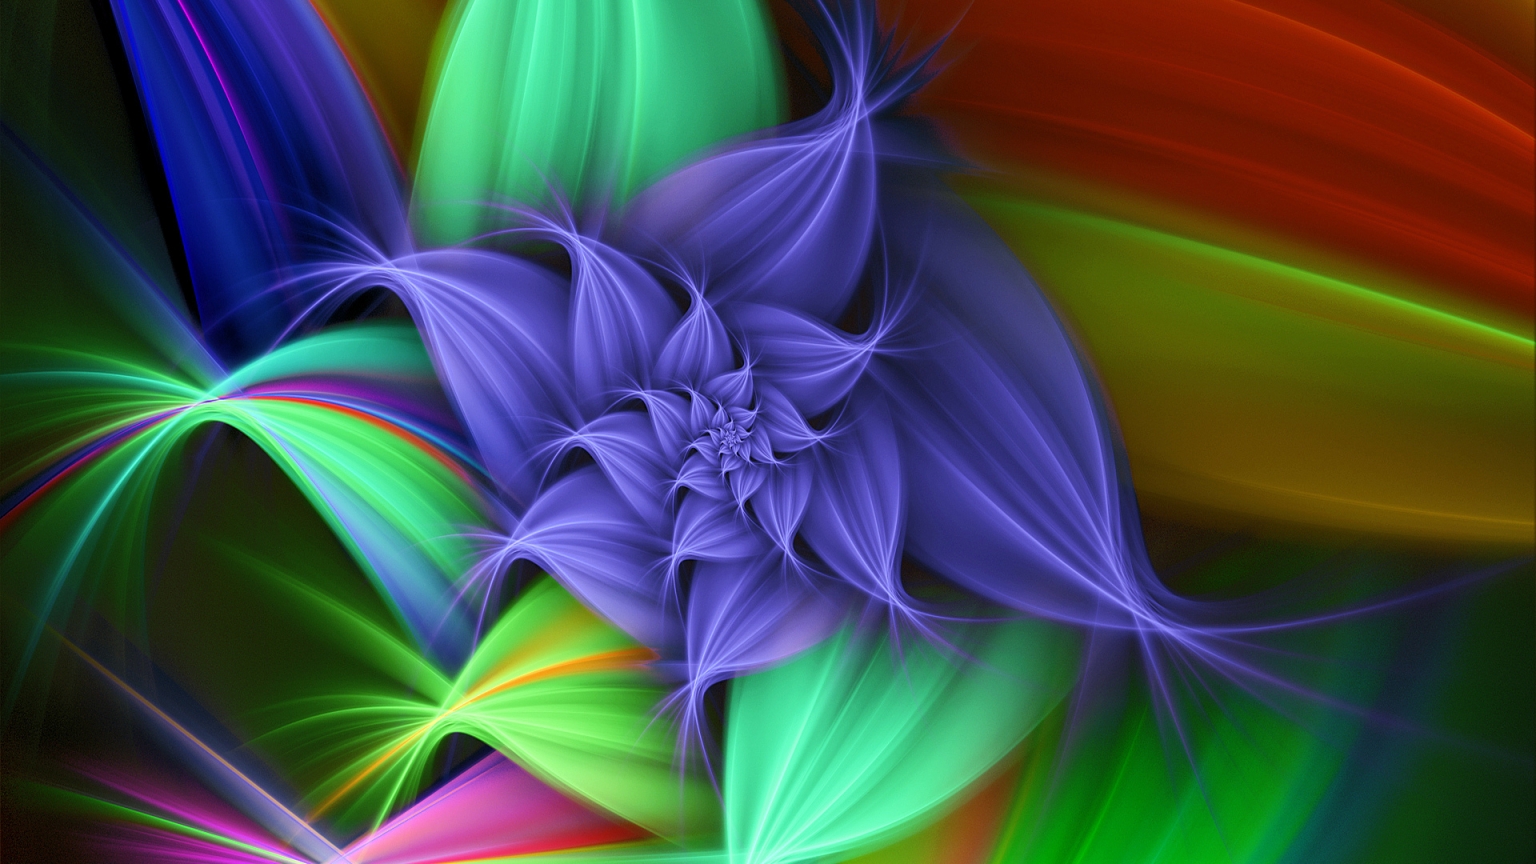 Colourful Flower for 1536 x 864 HDTV resolution